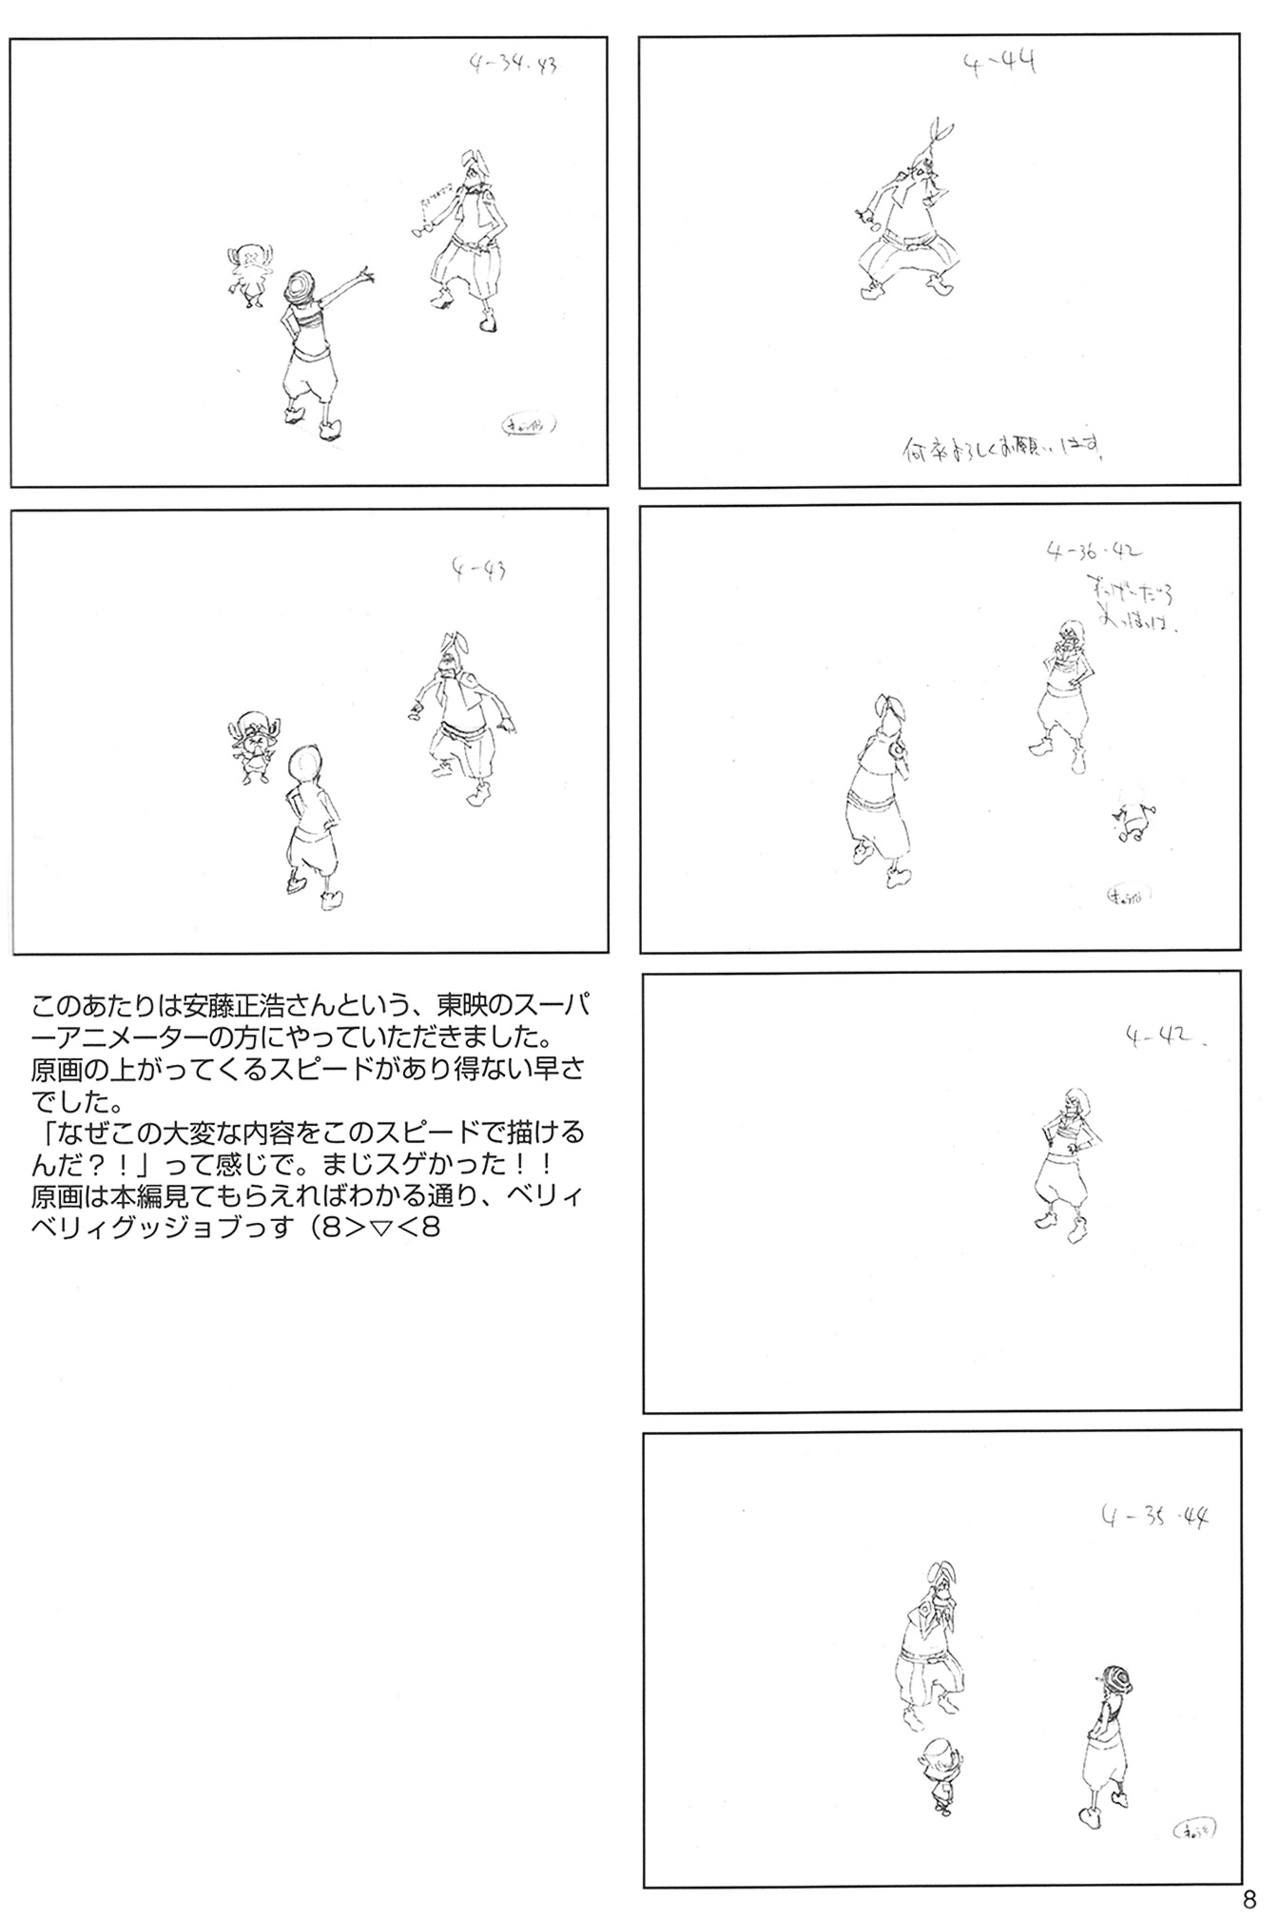 [Artbook] Sushio One Piece Movie 06 - Pencil Test and Design Book 6